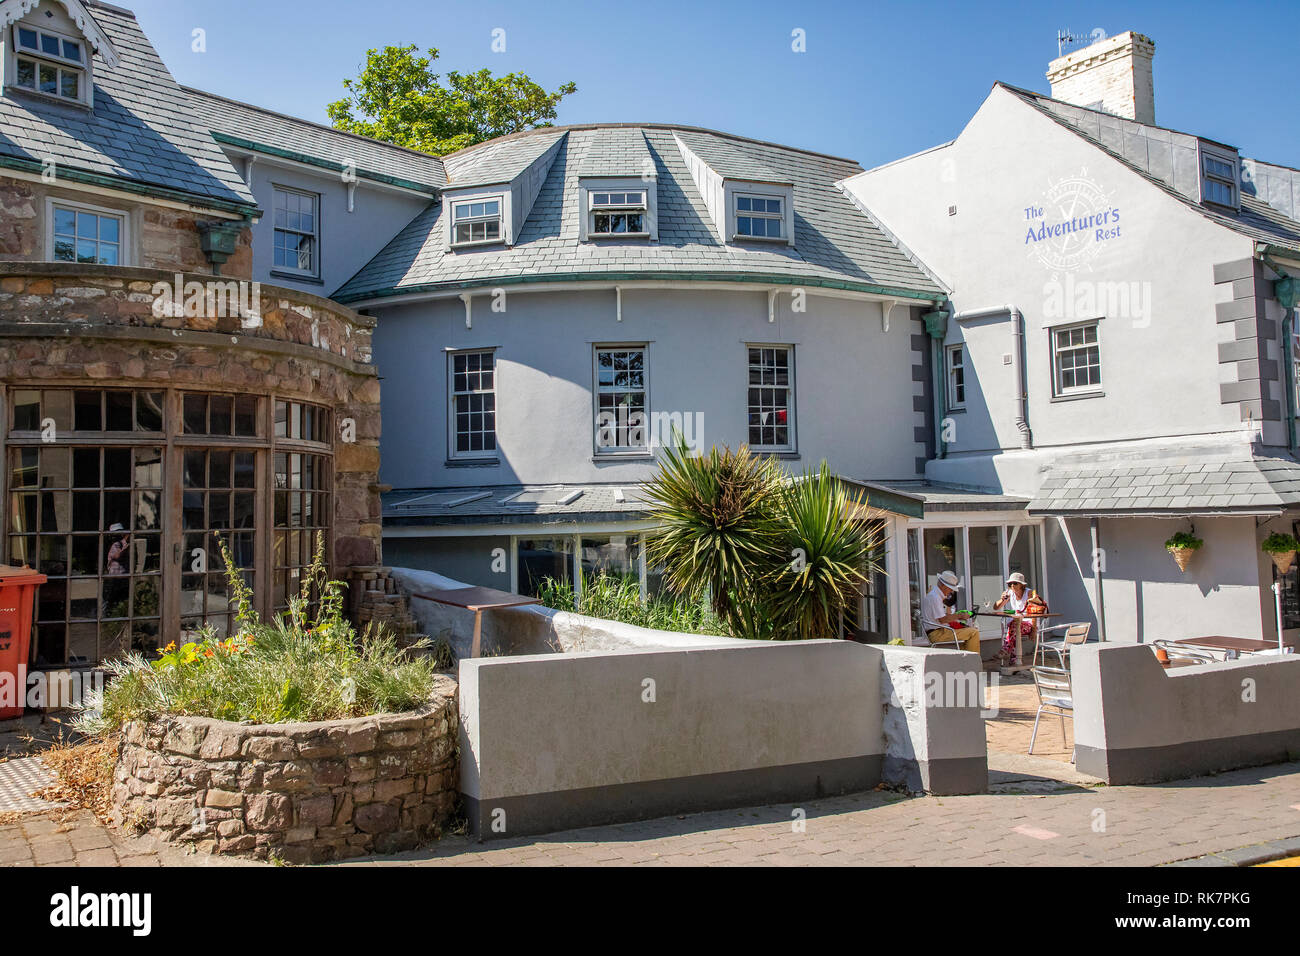 Gli avventurieri Rest Inn su Victoria Street Alderney Foto Stock